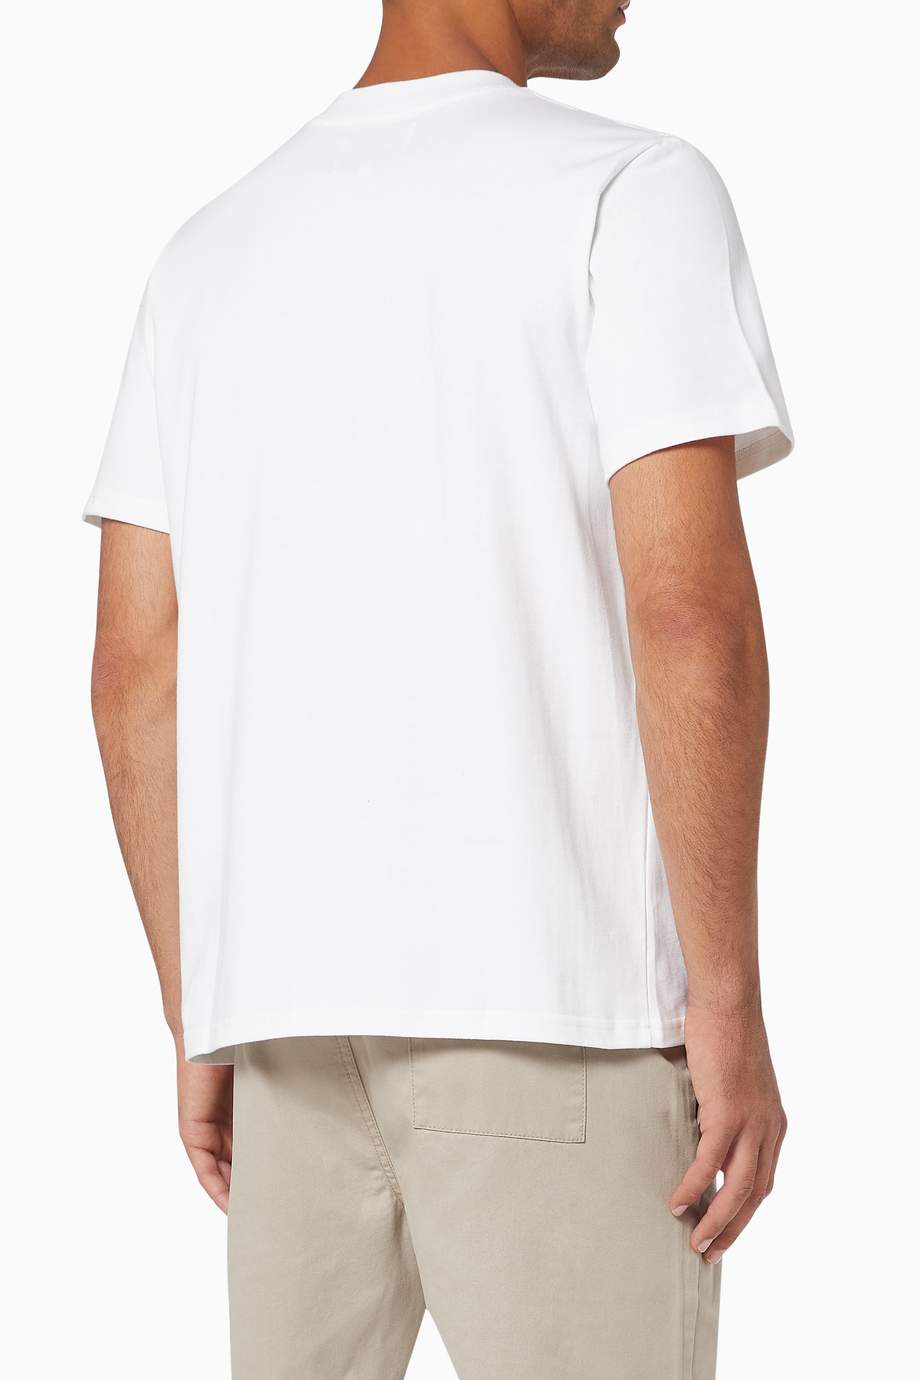 Shop Casablanca White Lago Di Casa Cotton T-Shirt for Men | Ounass UAE